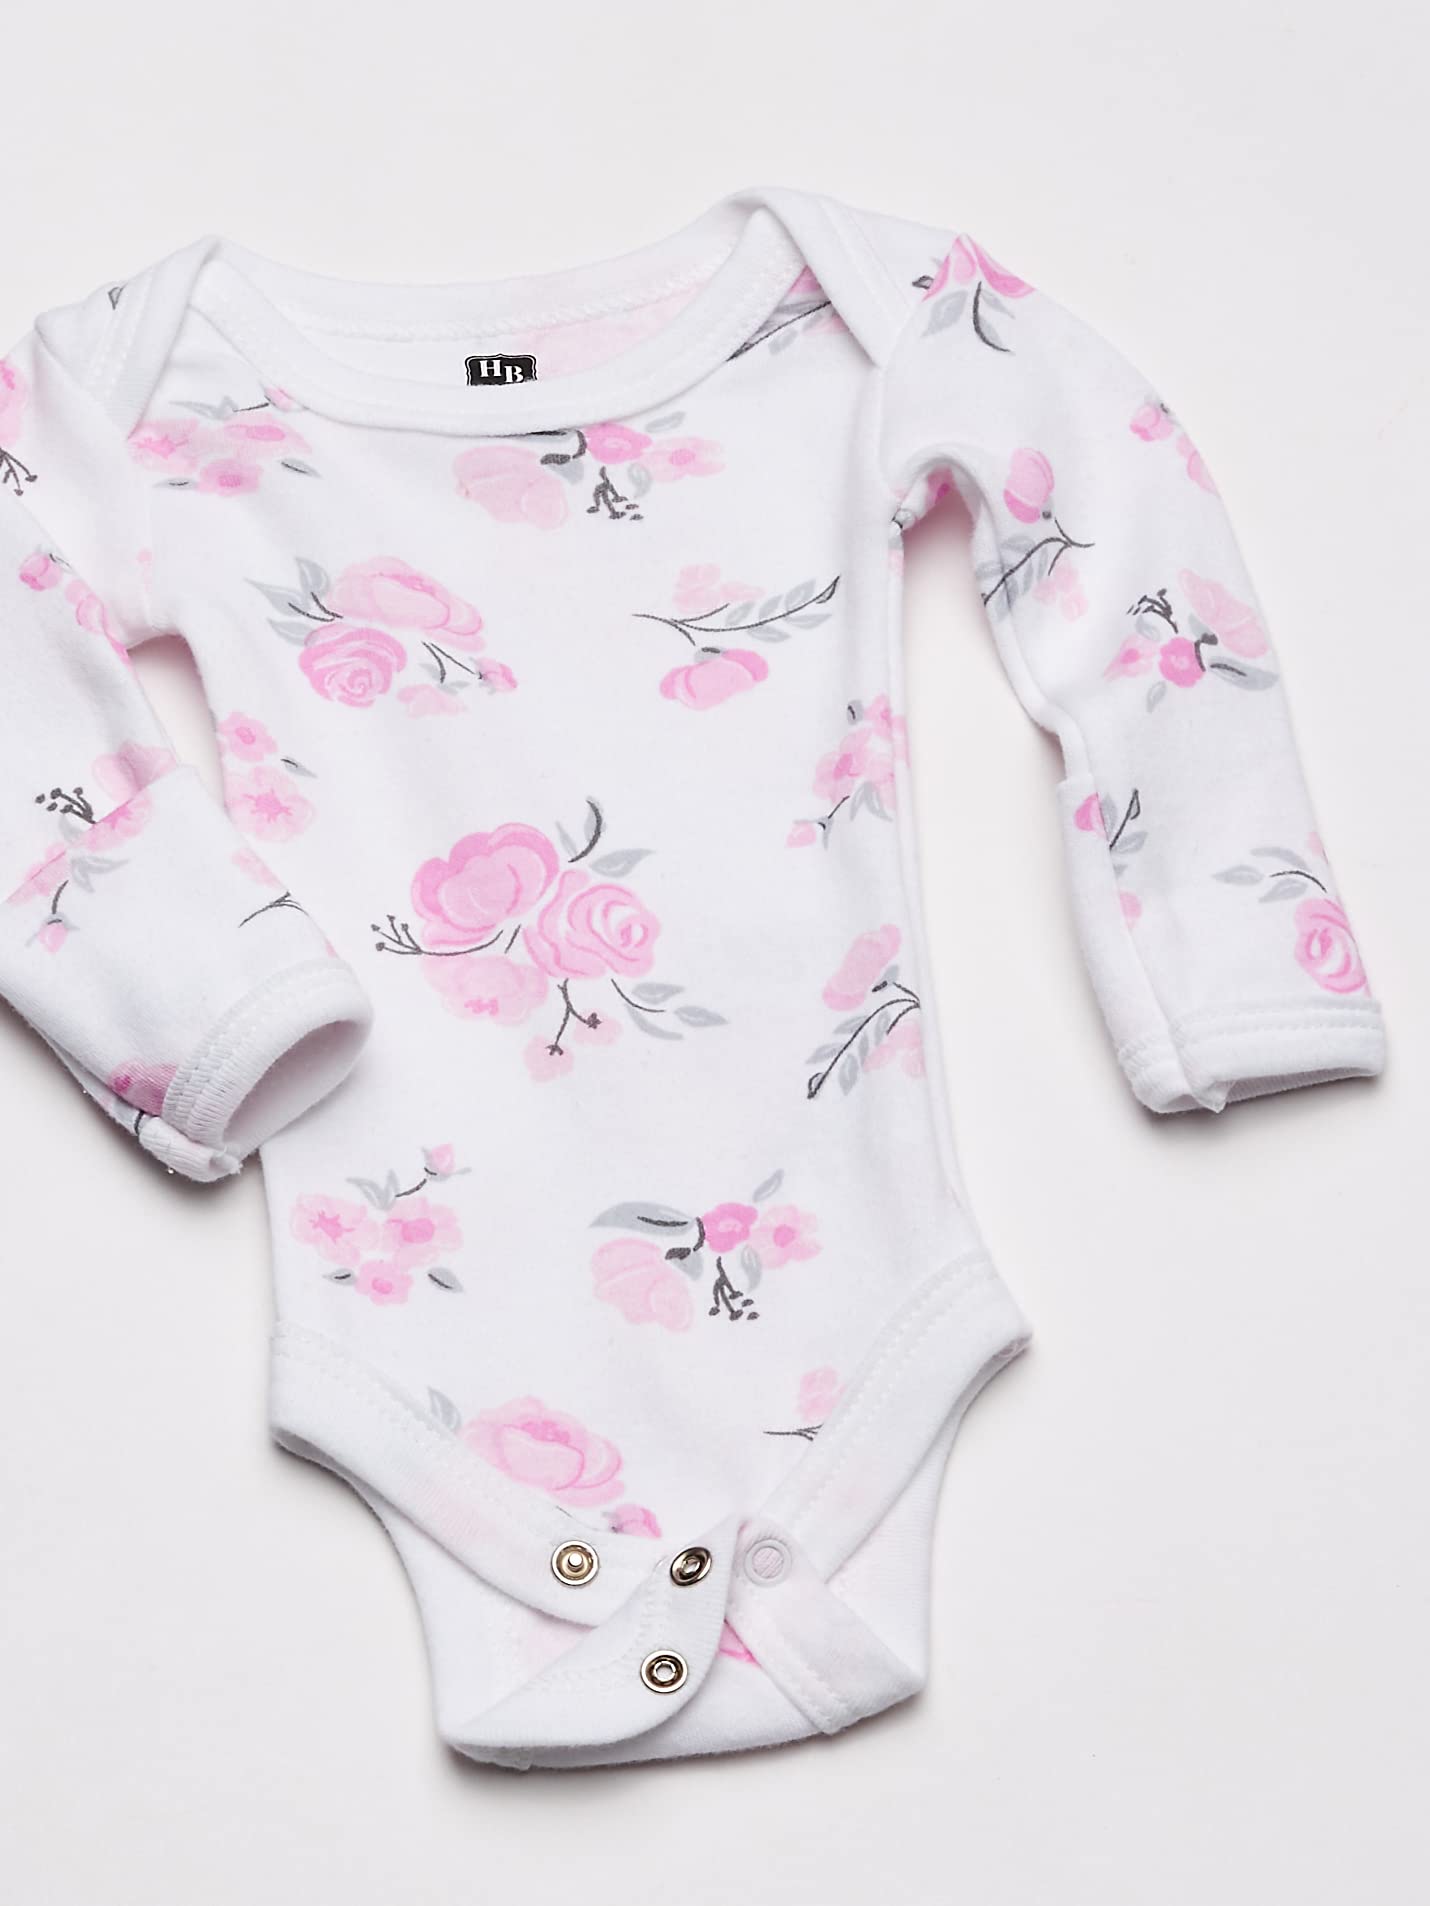 Hudson Baby Unisex Baby Cotton Preemie Bodysuits White Short-Sleeve, Preemie